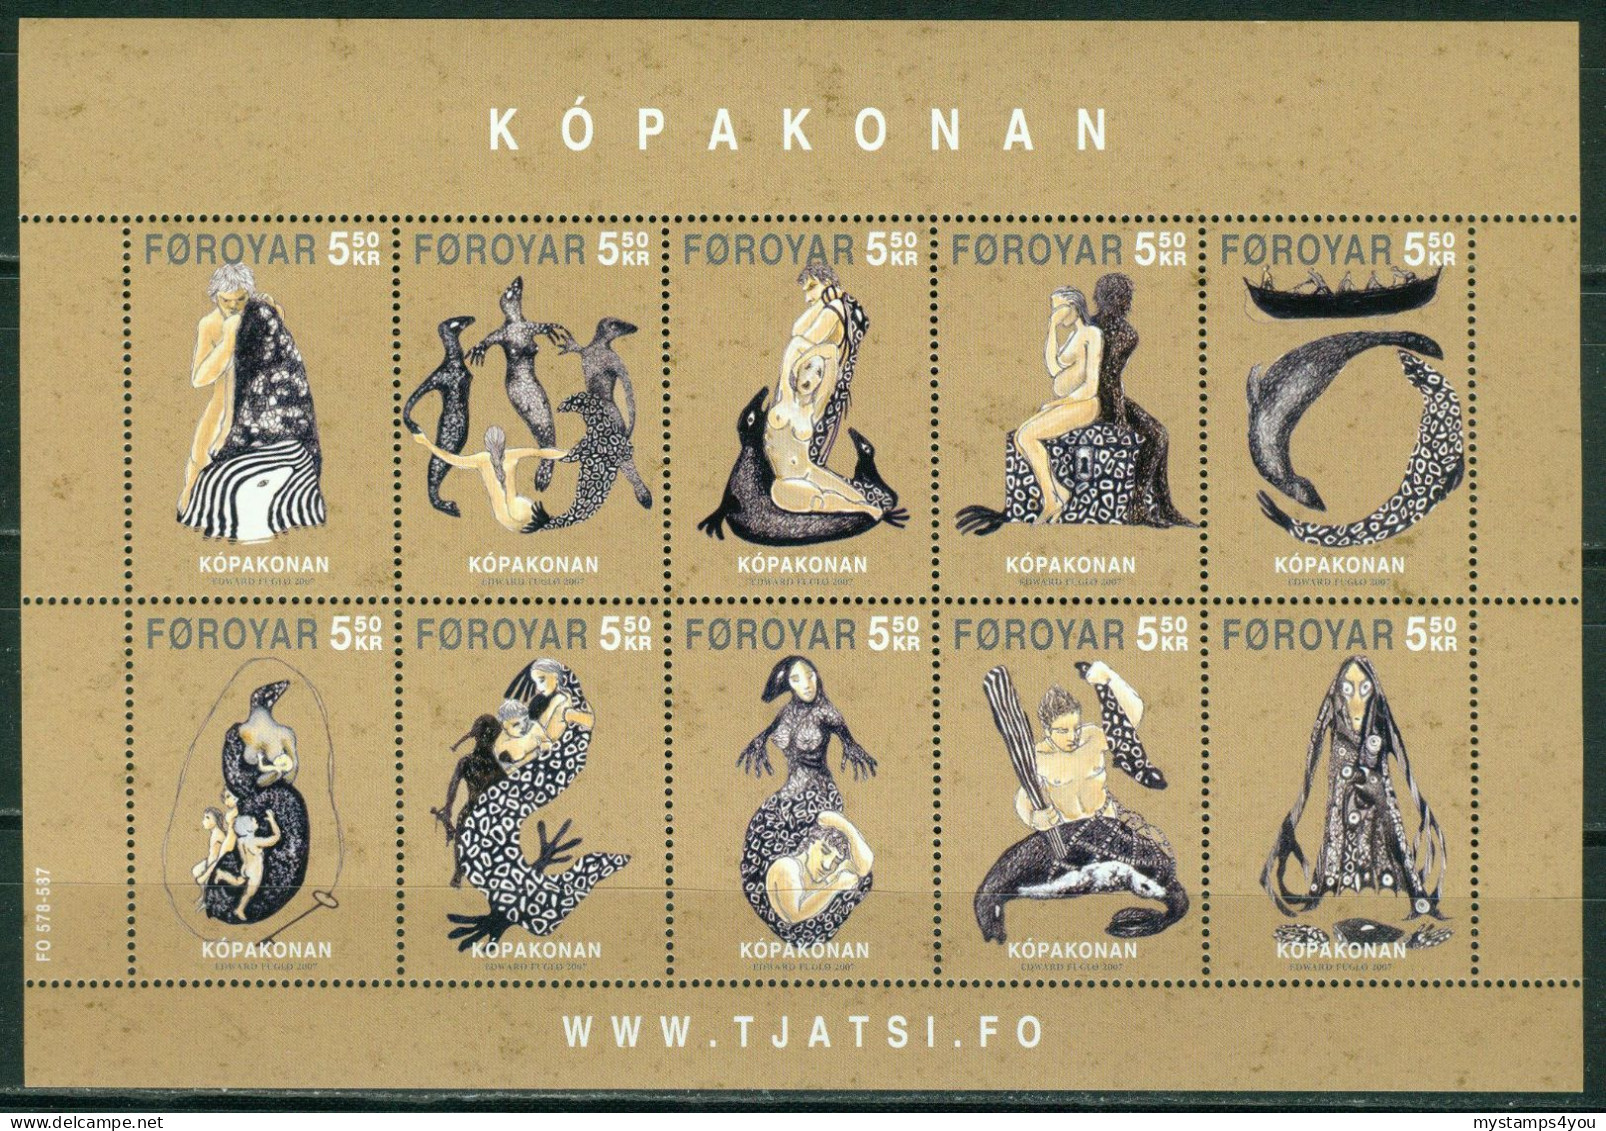 Bm Faroe Islands 2007 MiNr 586-595 Kleinbogen Sheet MNH | Myths And Legends. Kopakonan (seal Woman) #kar-1509 - Faroe Islands